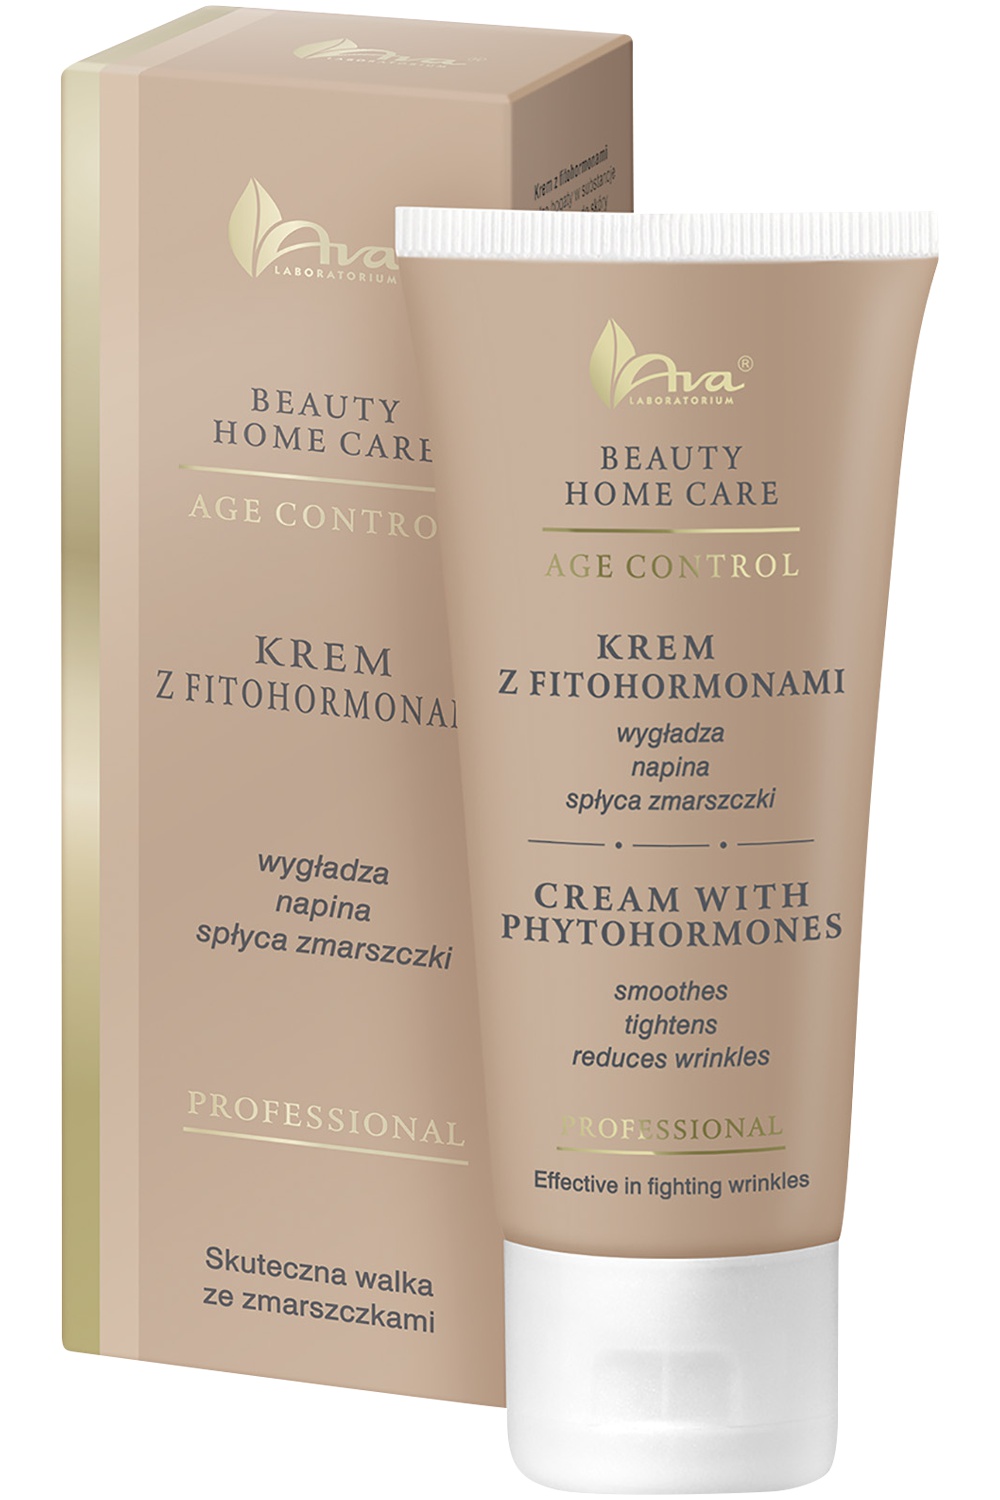 Ava Laboratorium Beauty Home Care Cream With Phytohormones